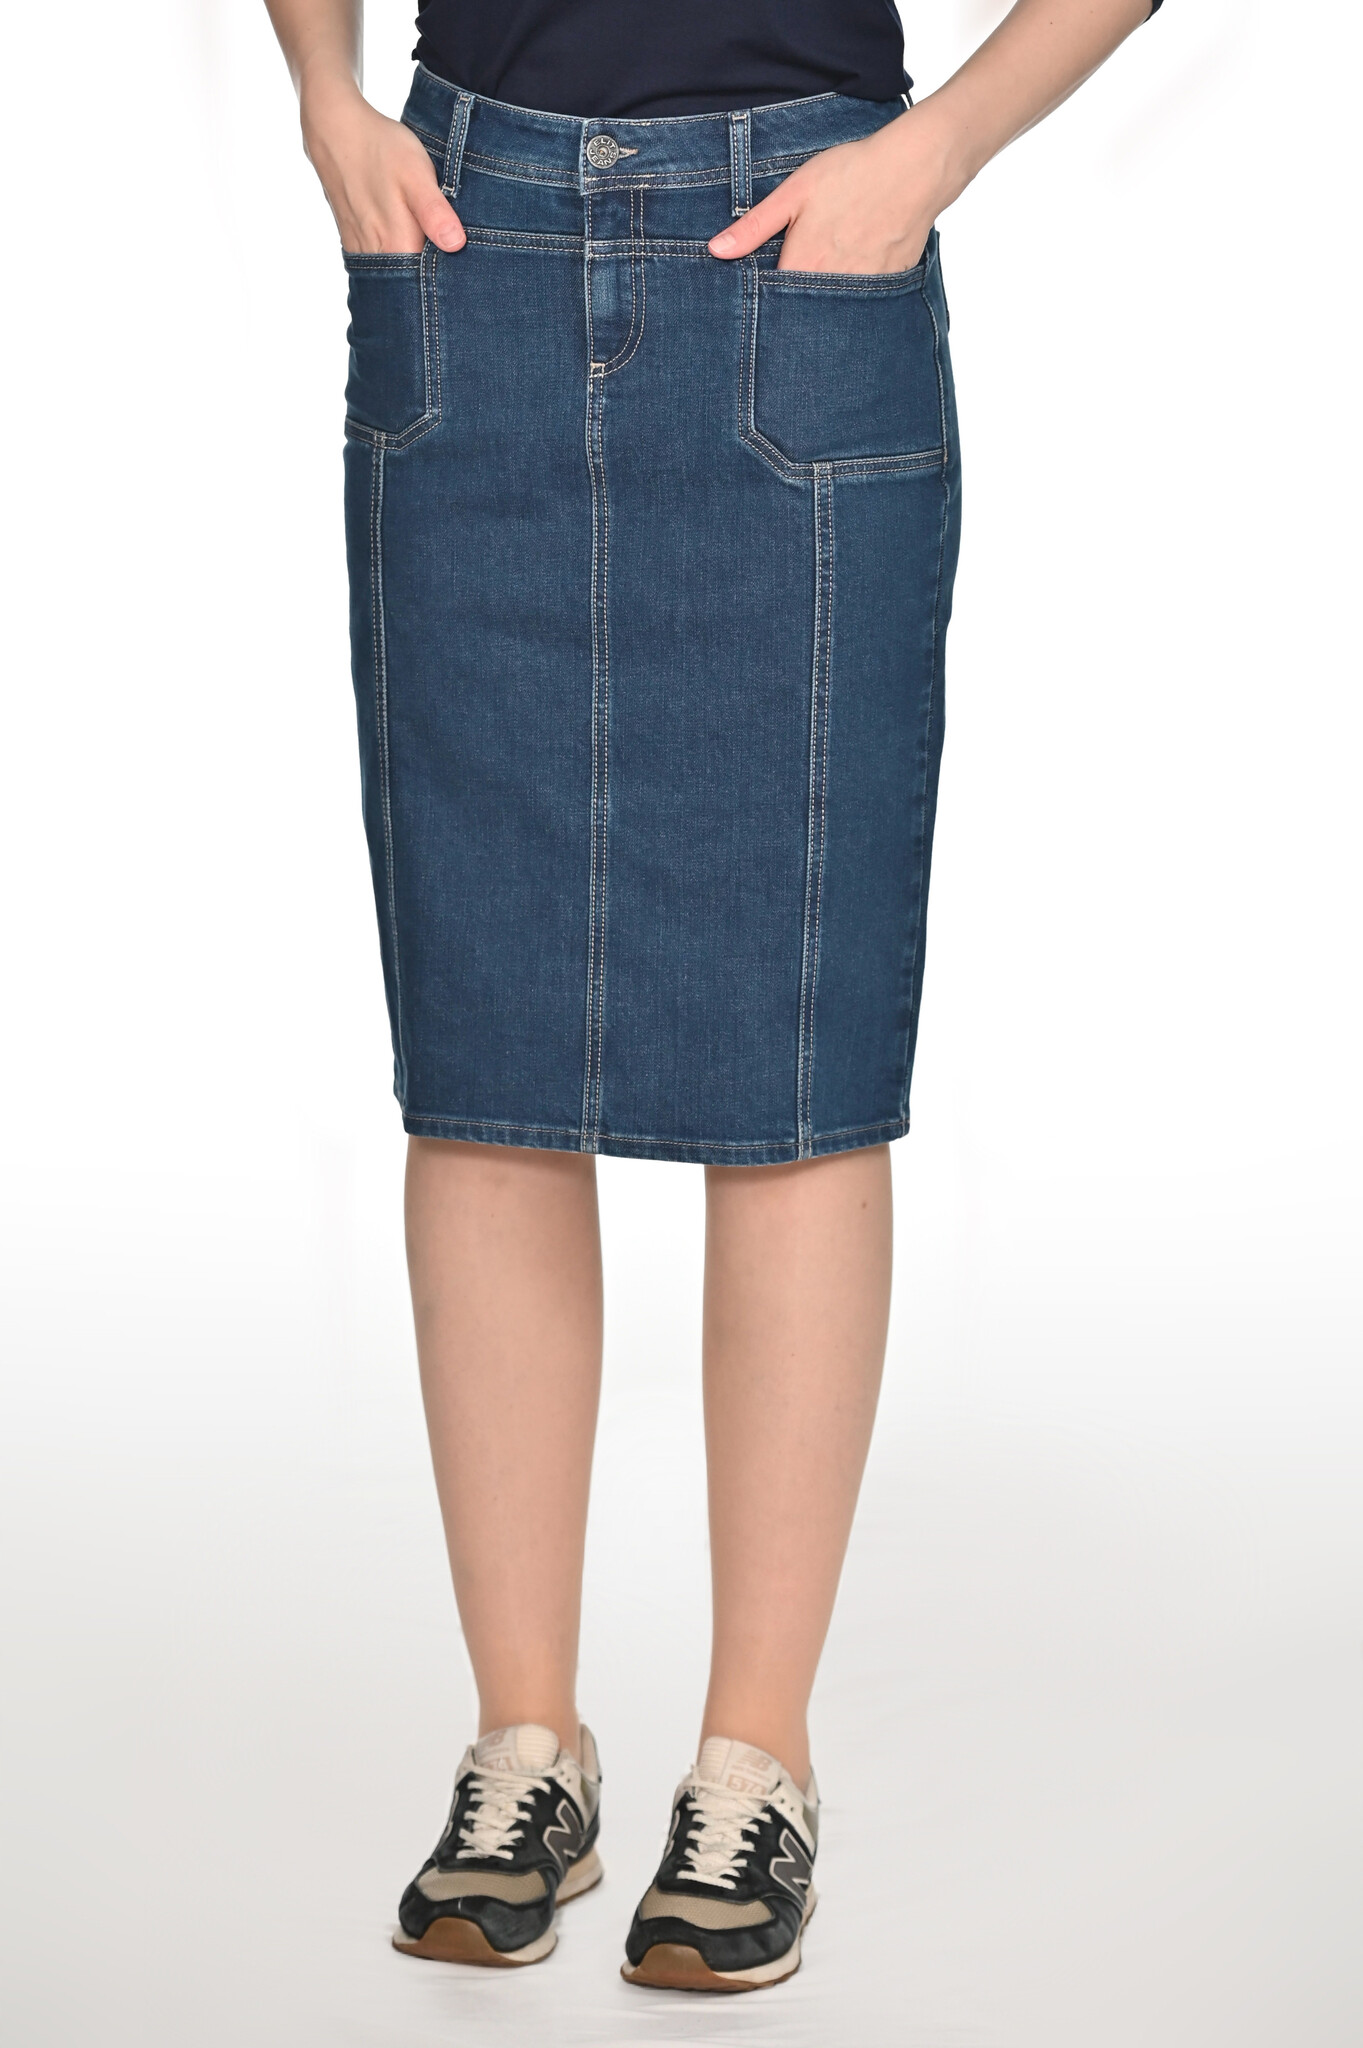 EXELIT DOO ELIT Damen Jeansrock SASKIA, jeans, 66 cm